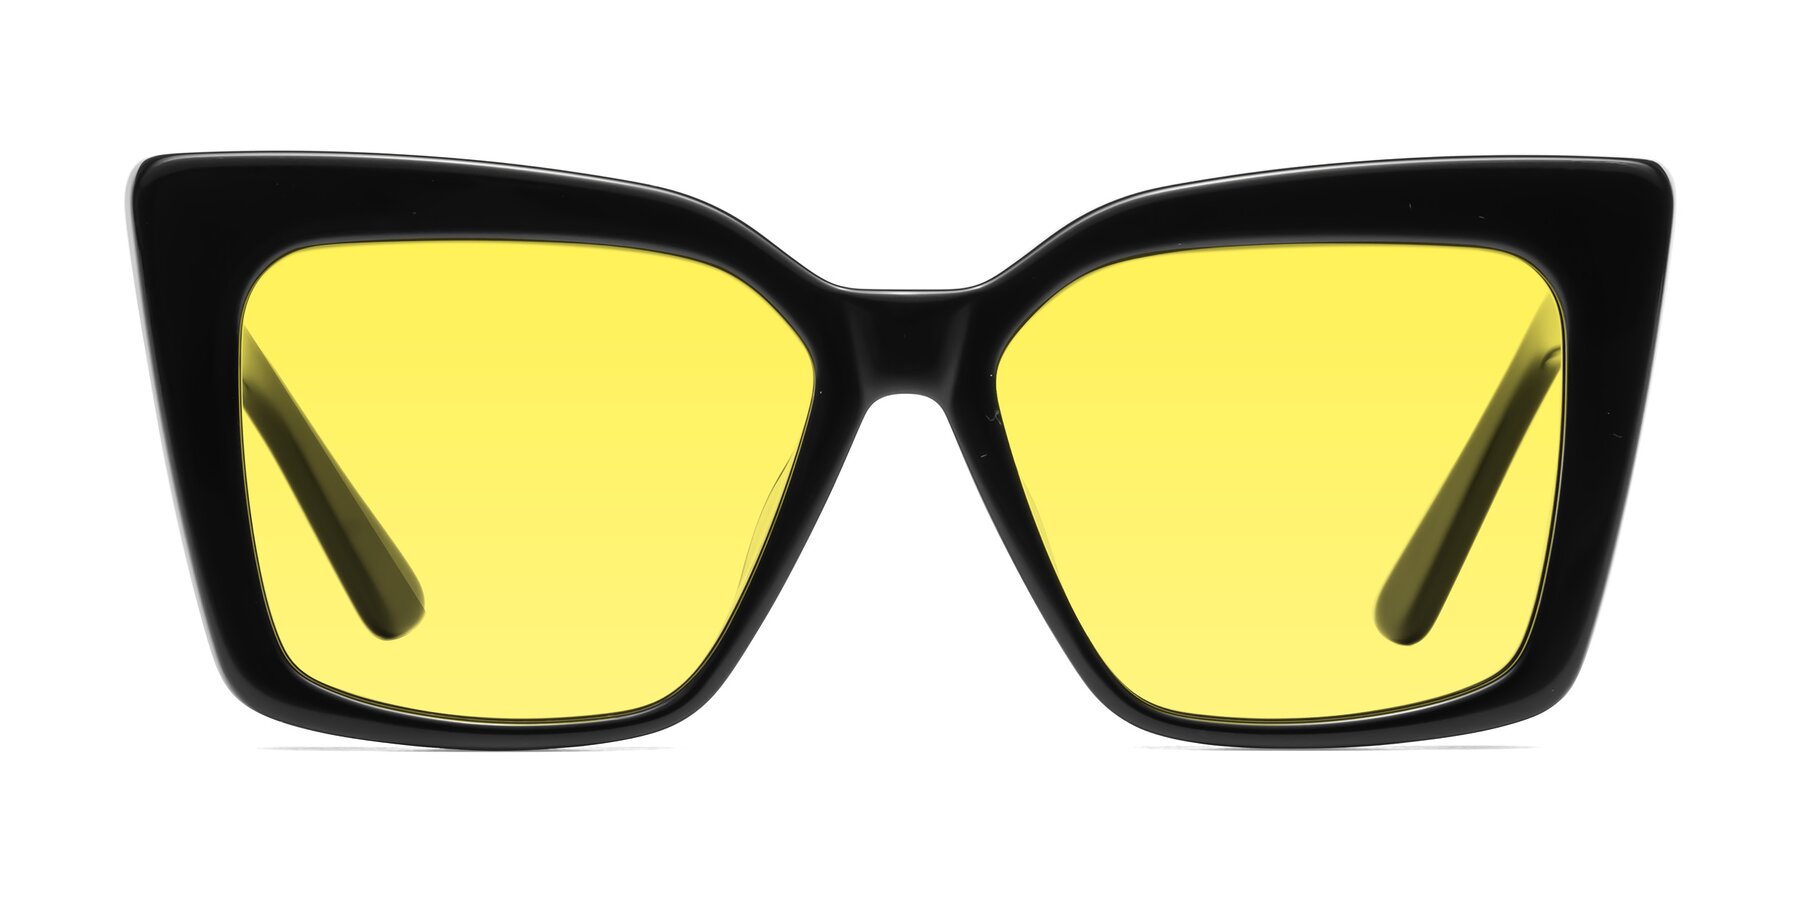 Hagen - Black Sunglasses